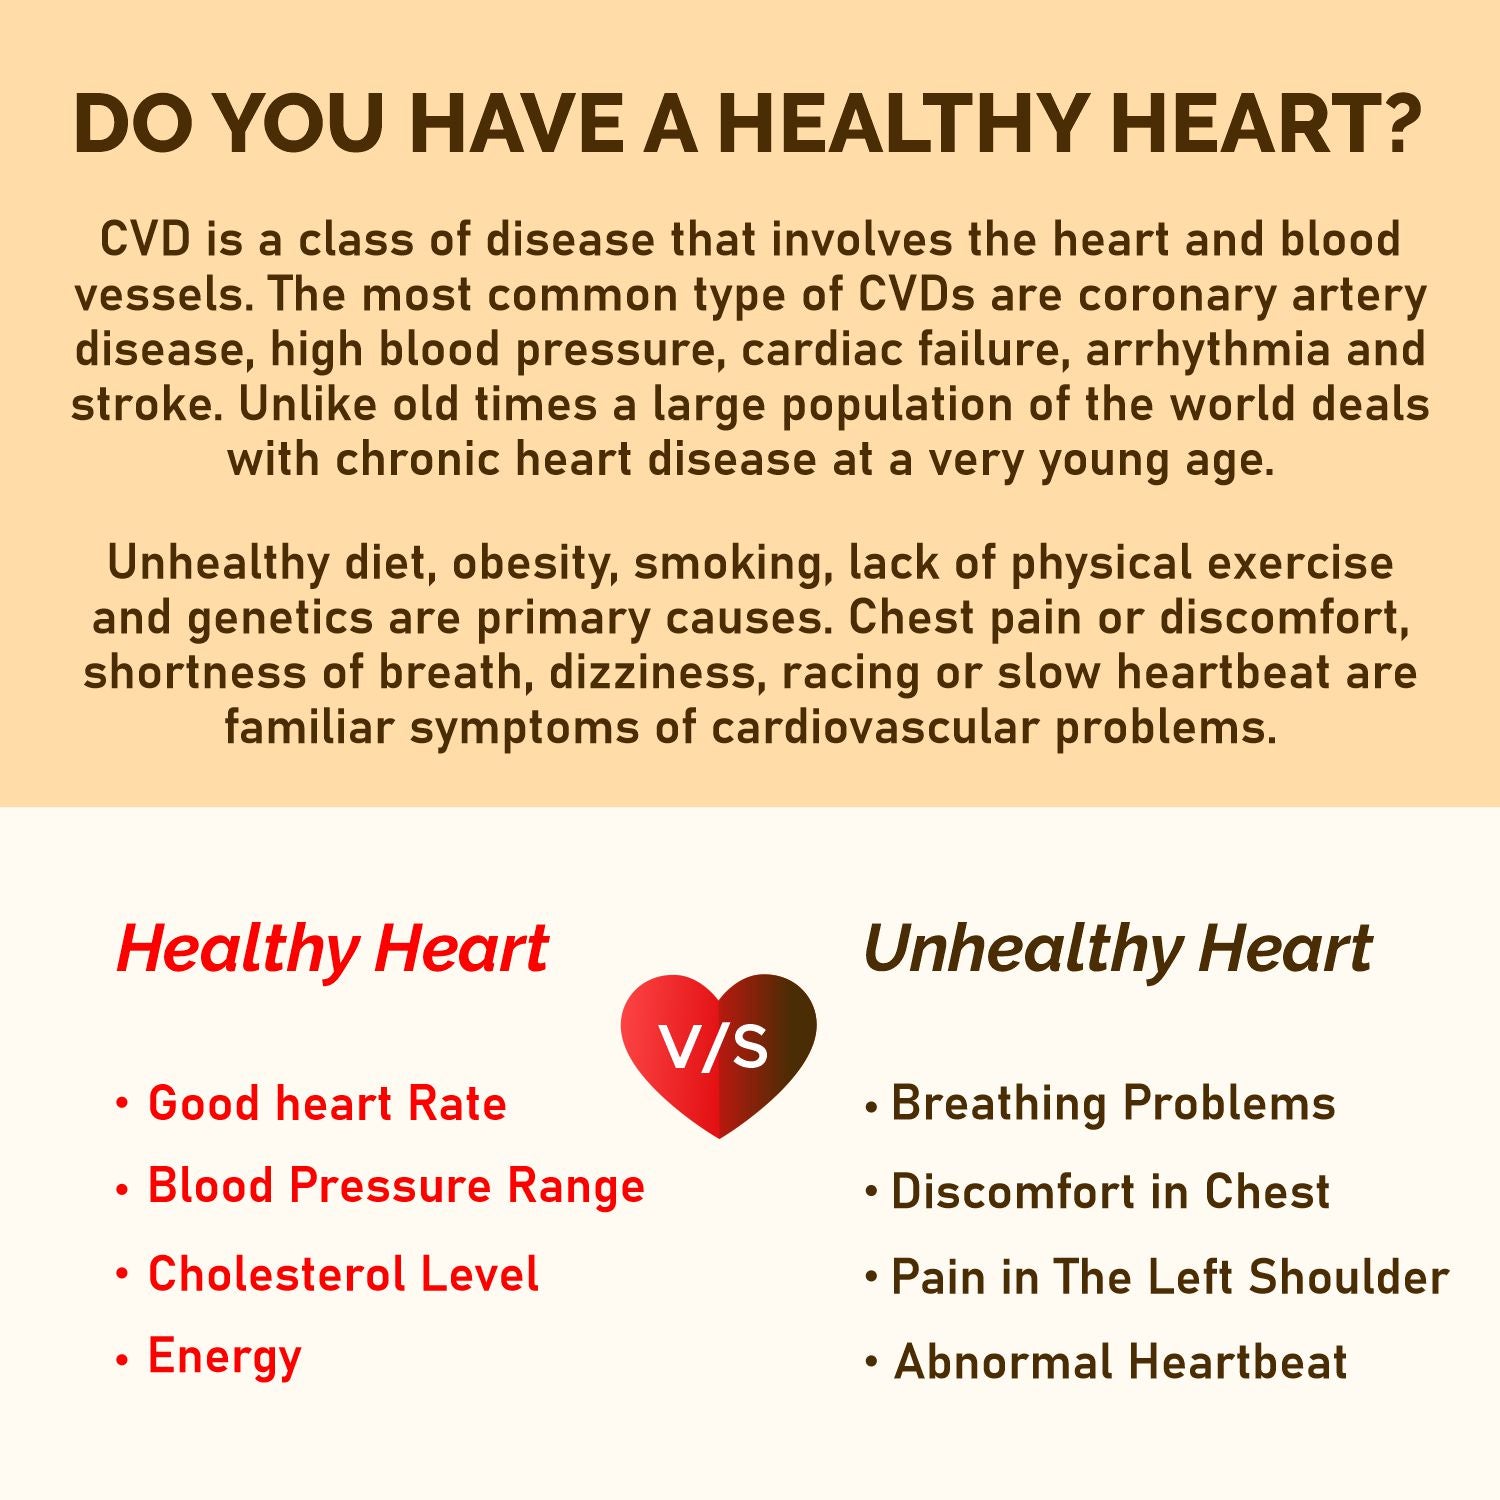 Healthy Heart vs Unhealthy Heart